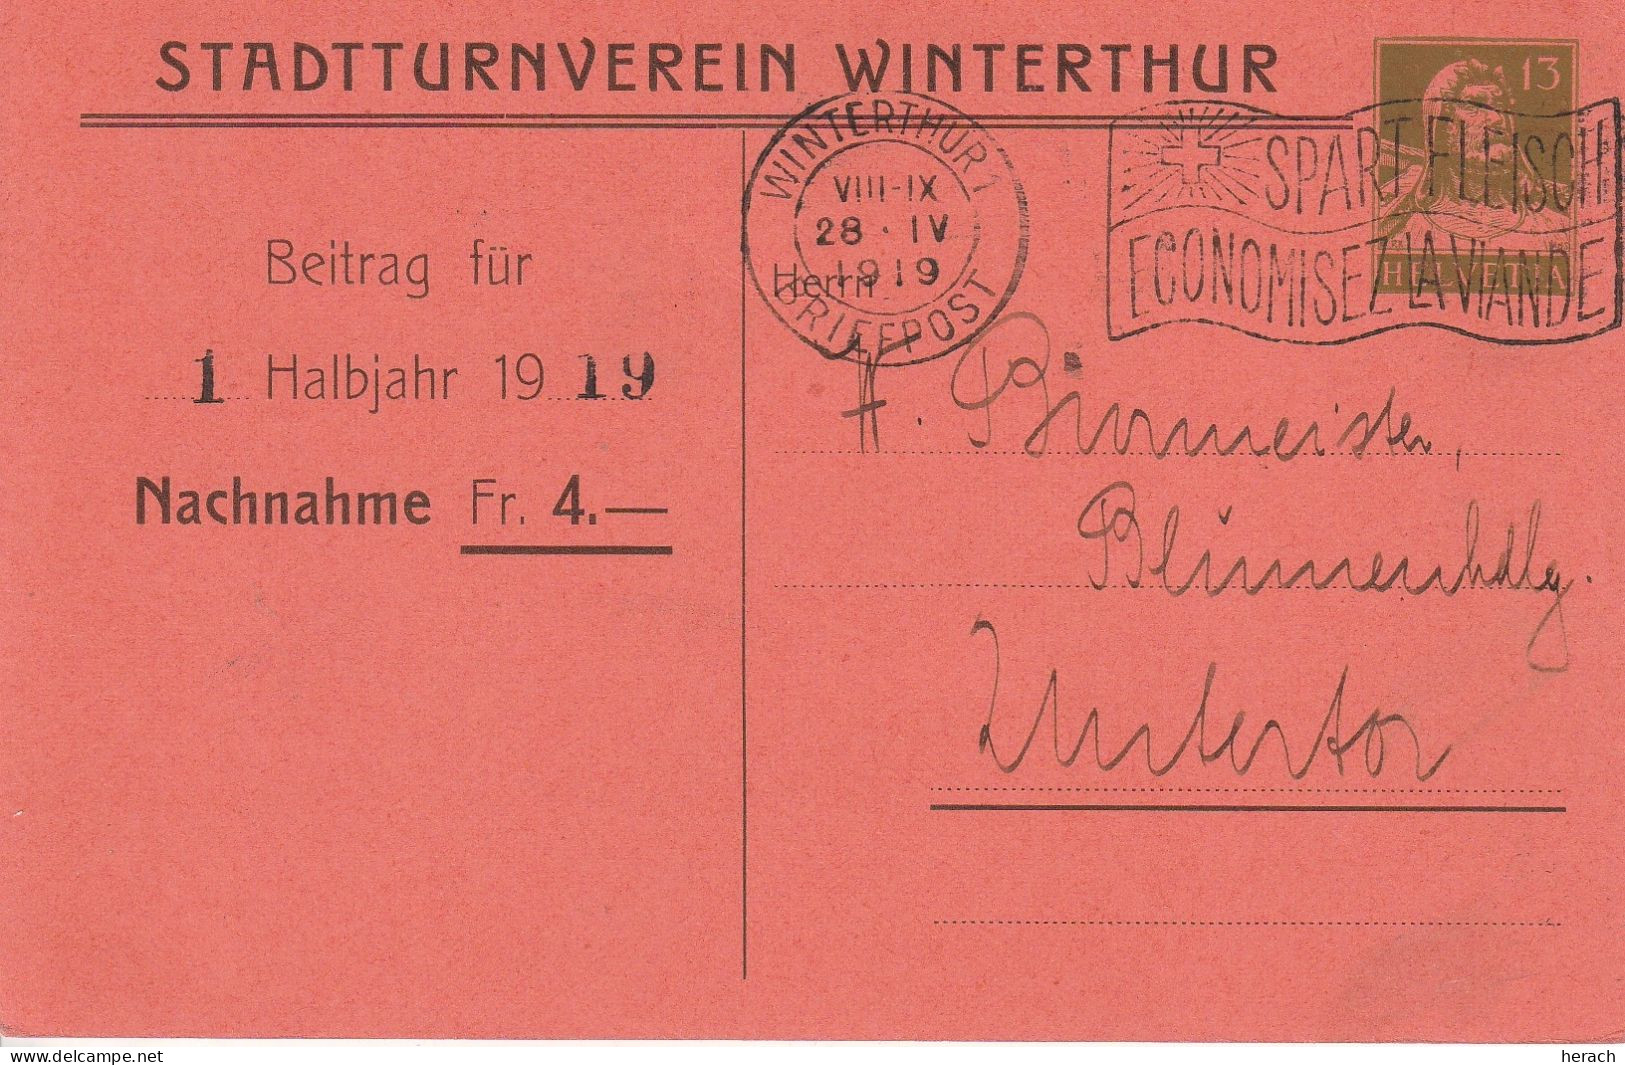 Suisse Entier Postal Privé Contre Remboursement Winterthur 1919 - Postwaardestukken